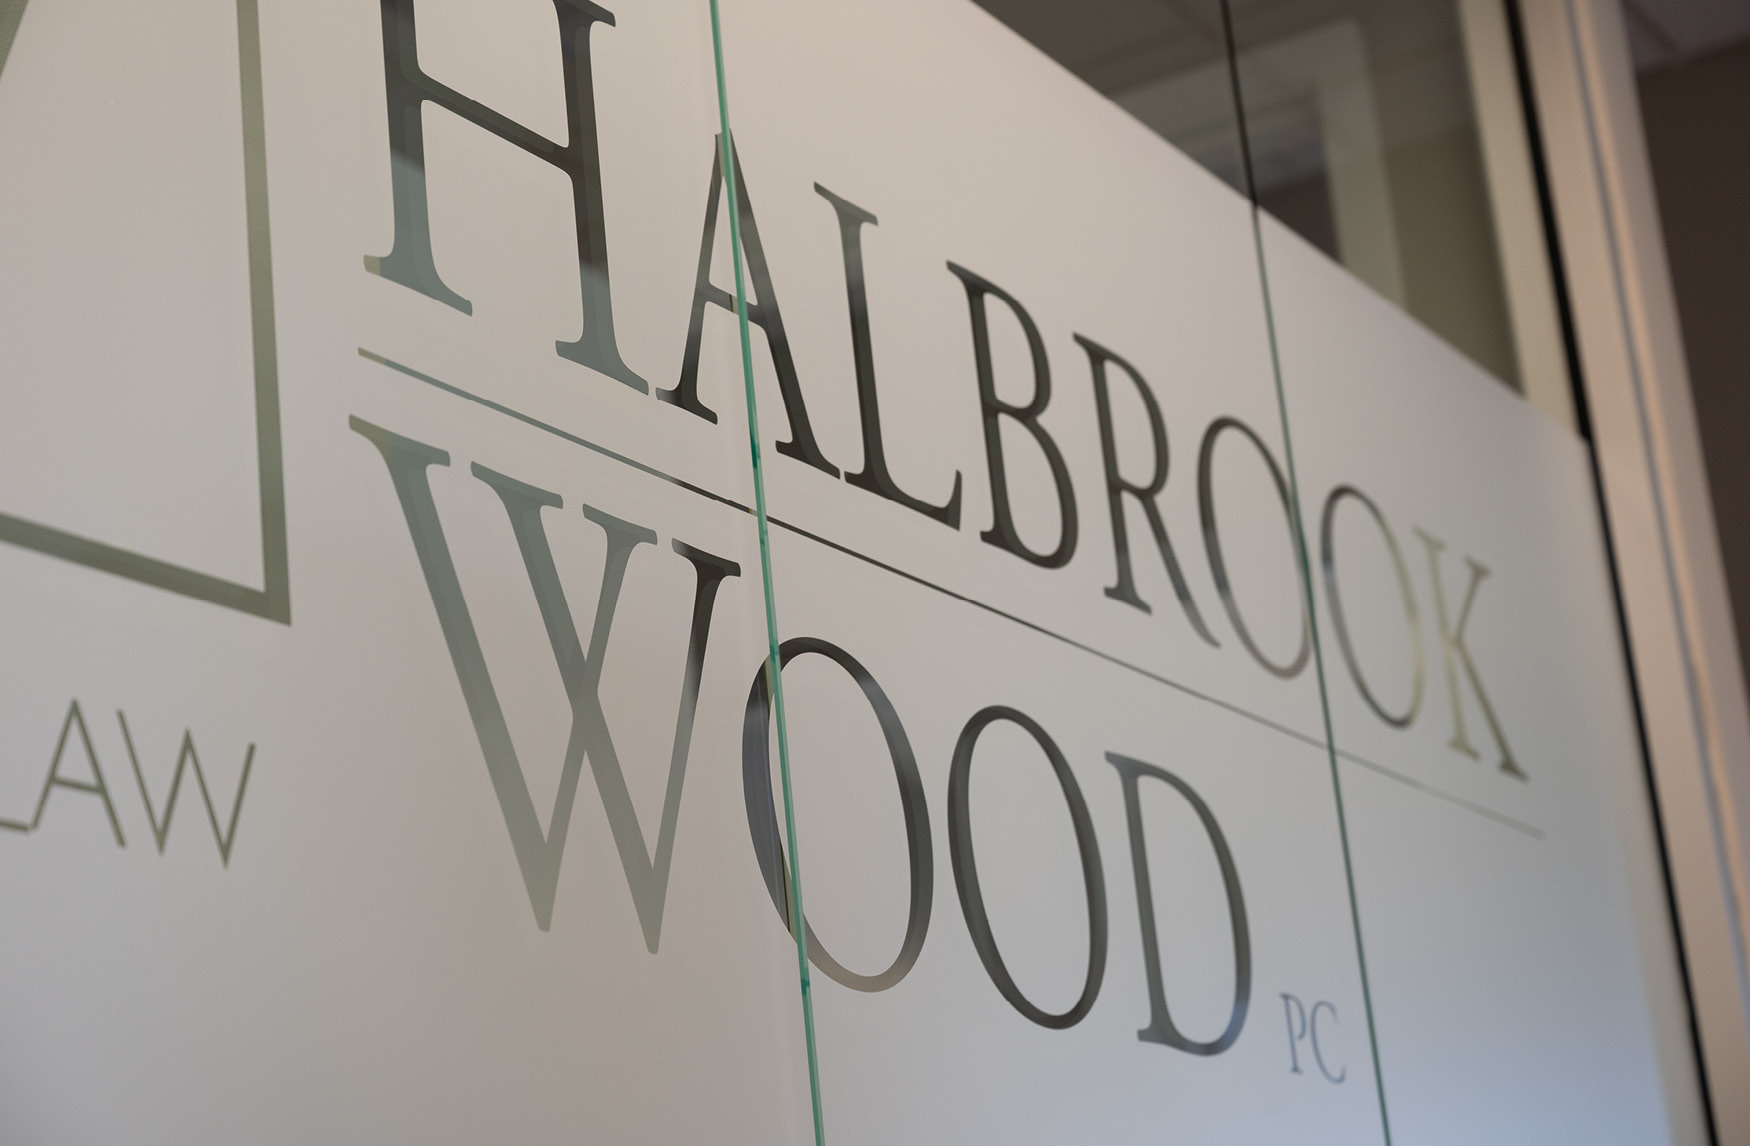 Halbrook Wood logo on conference room window